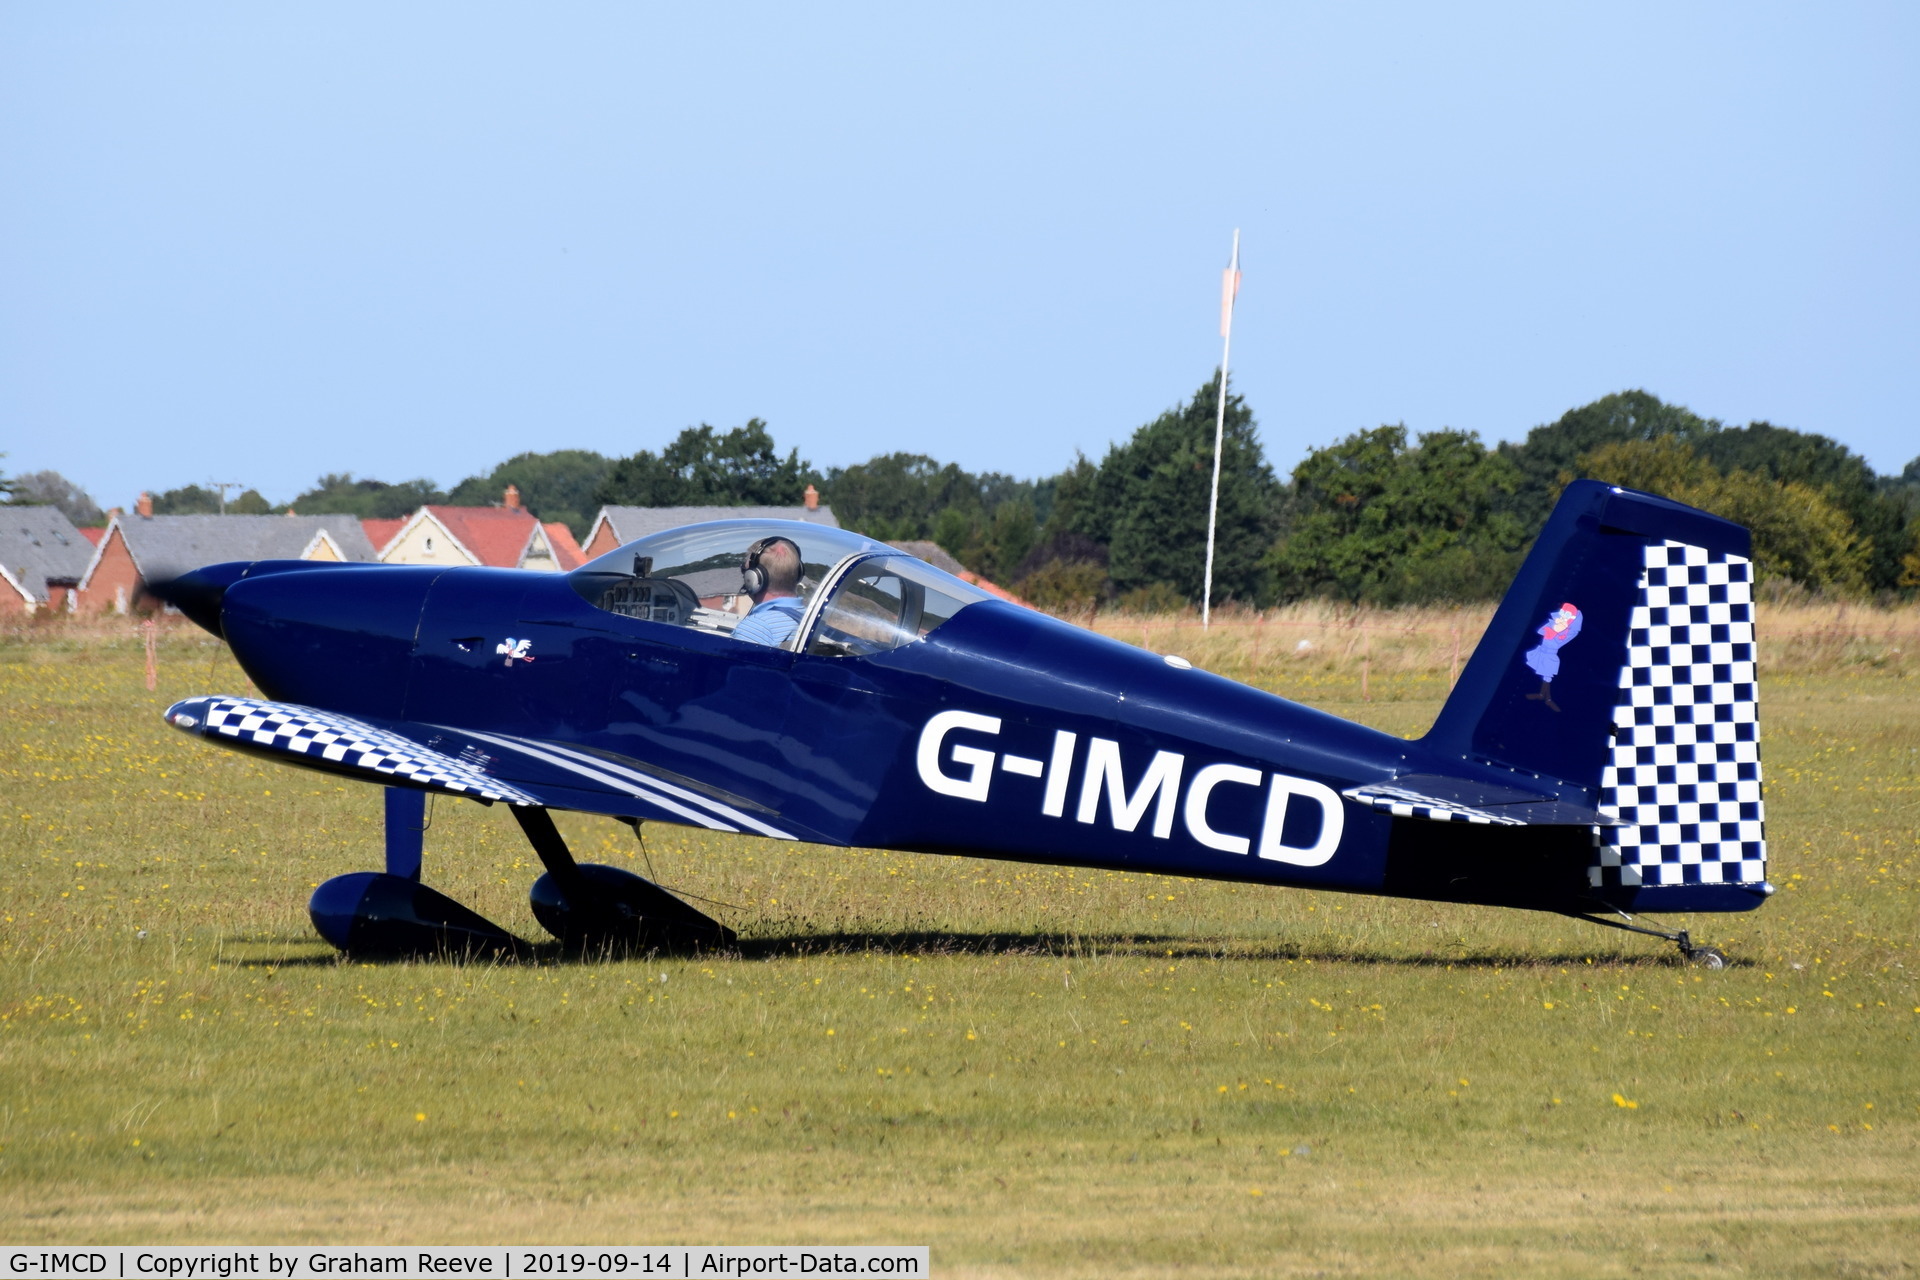 G-IMCD, 2005 Vans RV-7 C/N PFA 323-13965, just landed at, Bury St Edmunds, Rougham Airfield, UK.